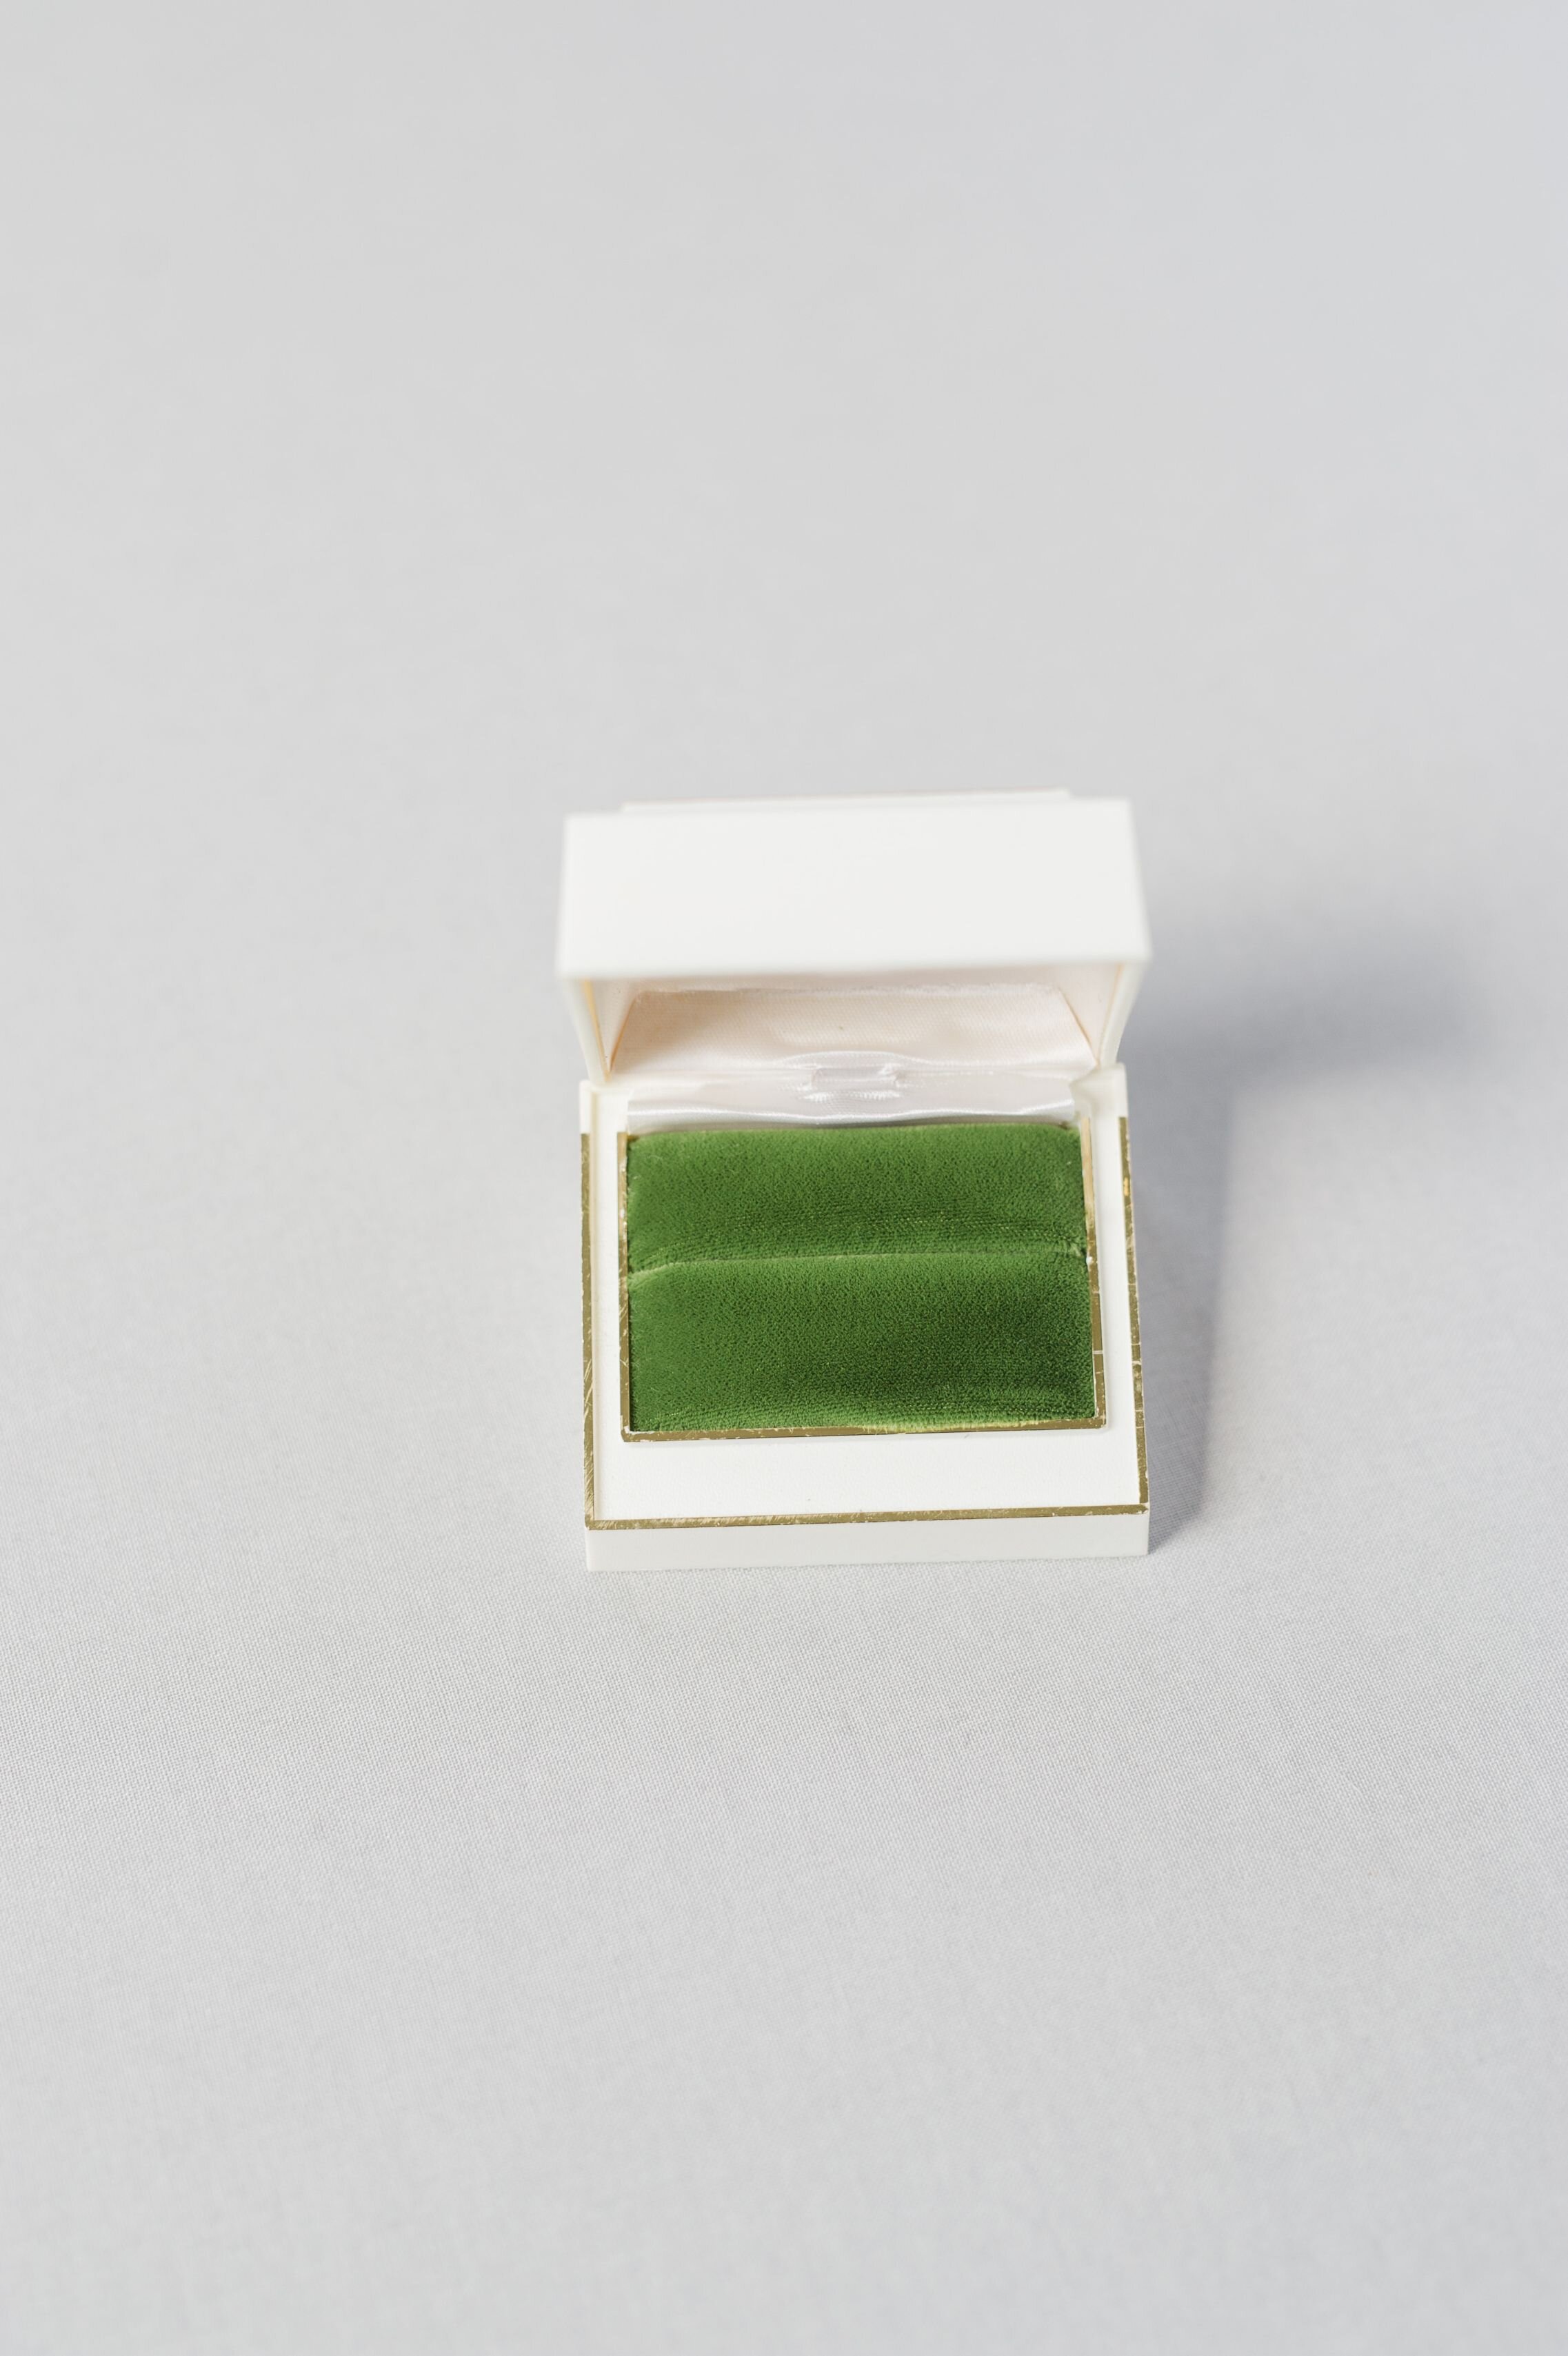 vintage acrylic art deco ring box. green velvet lining — Brooke Allison